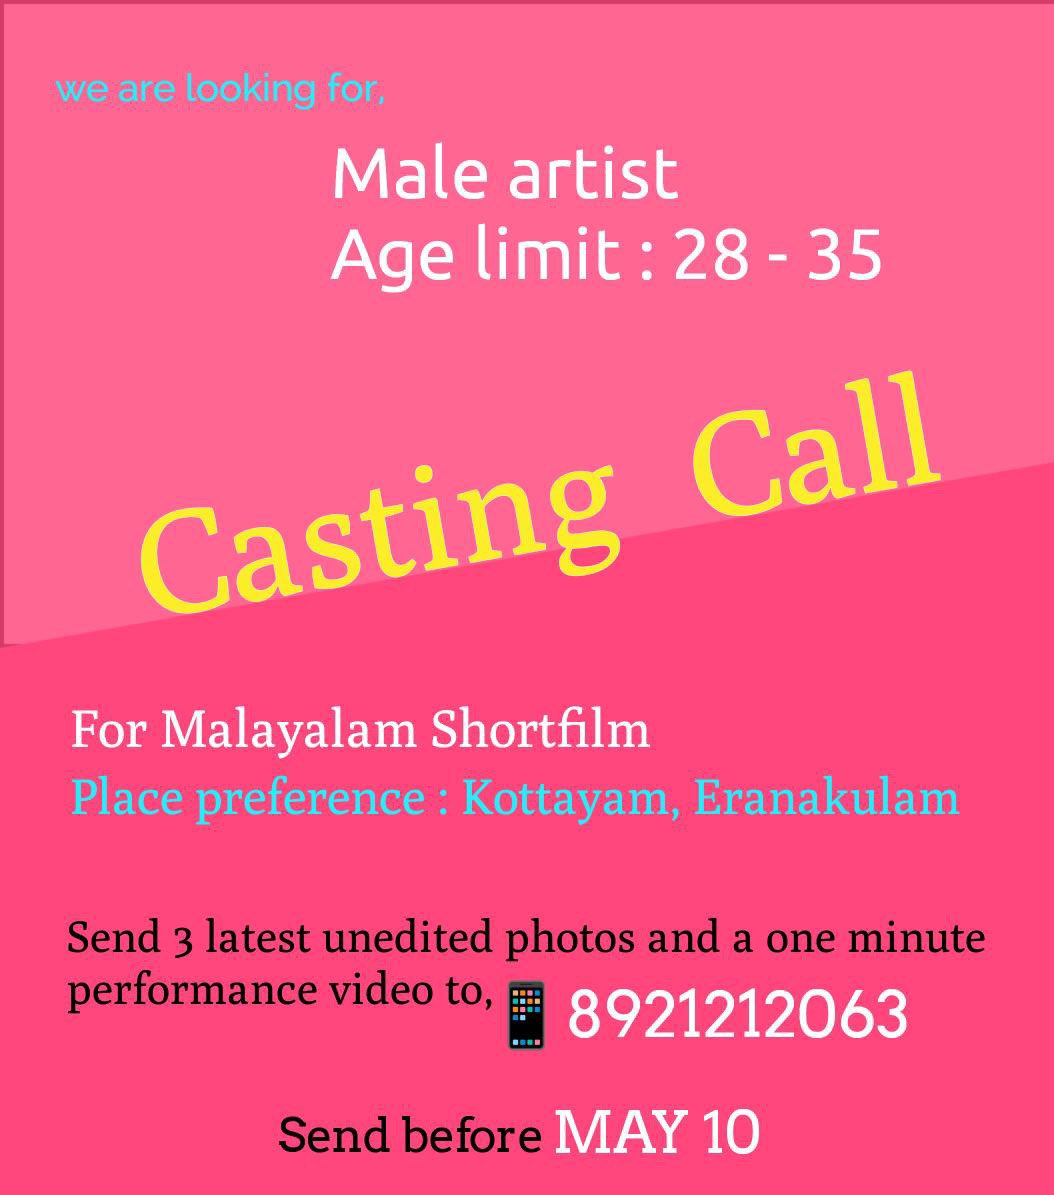 Casting Call 🎭 Short Film (Malayalam) Looking for Male actors. Check poster for more #arh #auditionsarehere #castingcall #shortfilm #shortfilmmalayalam #mollywood #malayalam #malayalamshortfilm #maleactor #maleactors #maleartist #kochi #ernakulam #kottayam #kottayamkaran